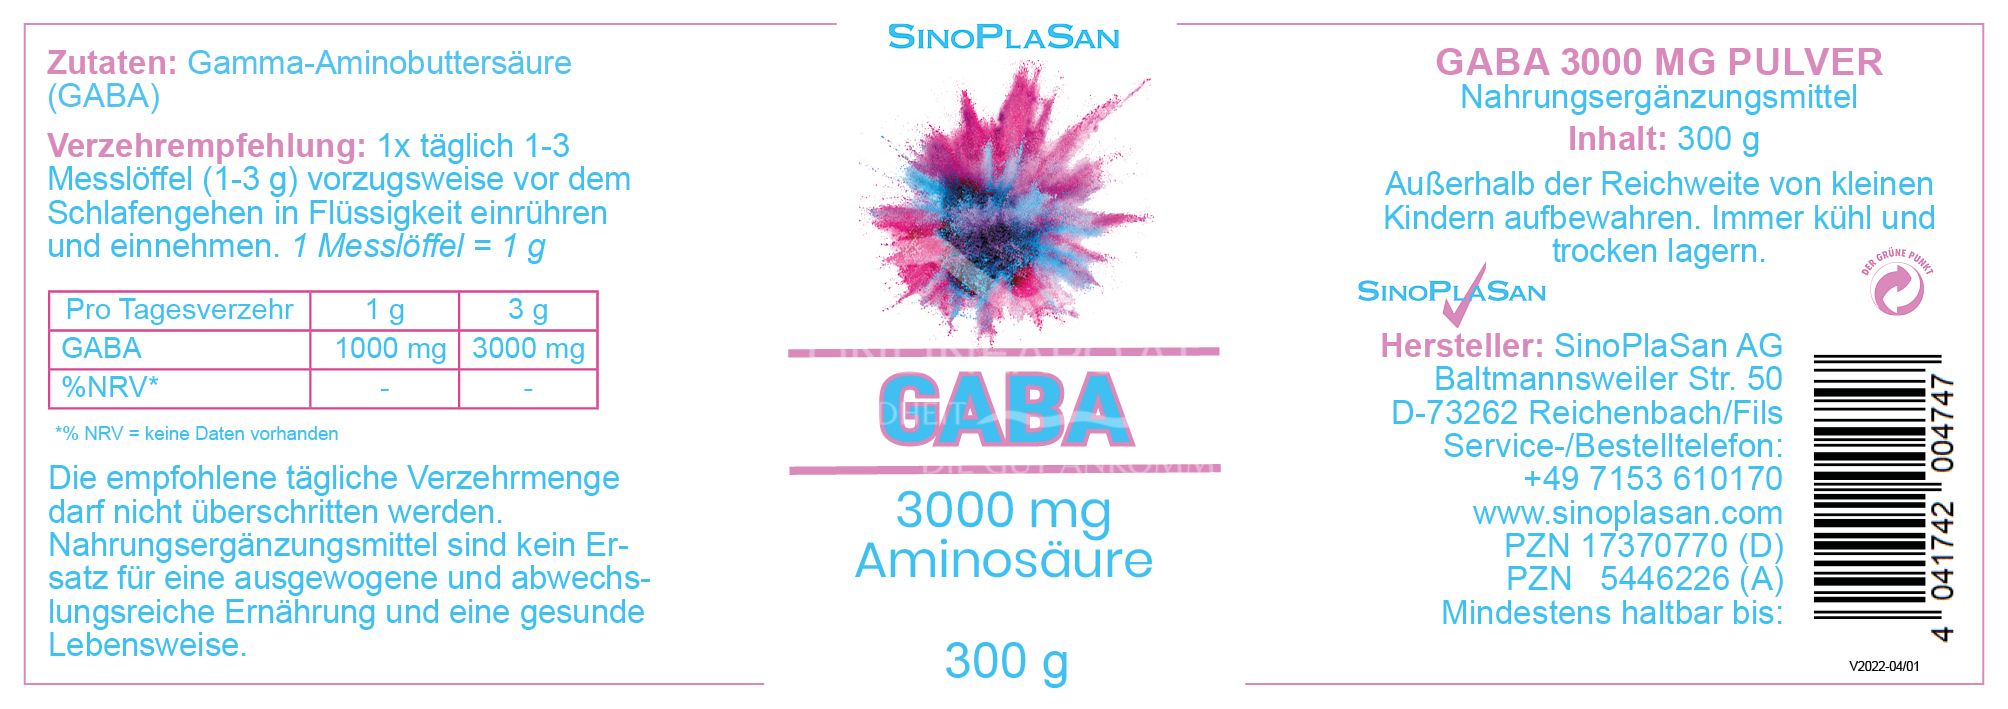 SinoPlaSan GABA 3000 mg Aminosäure Pulver